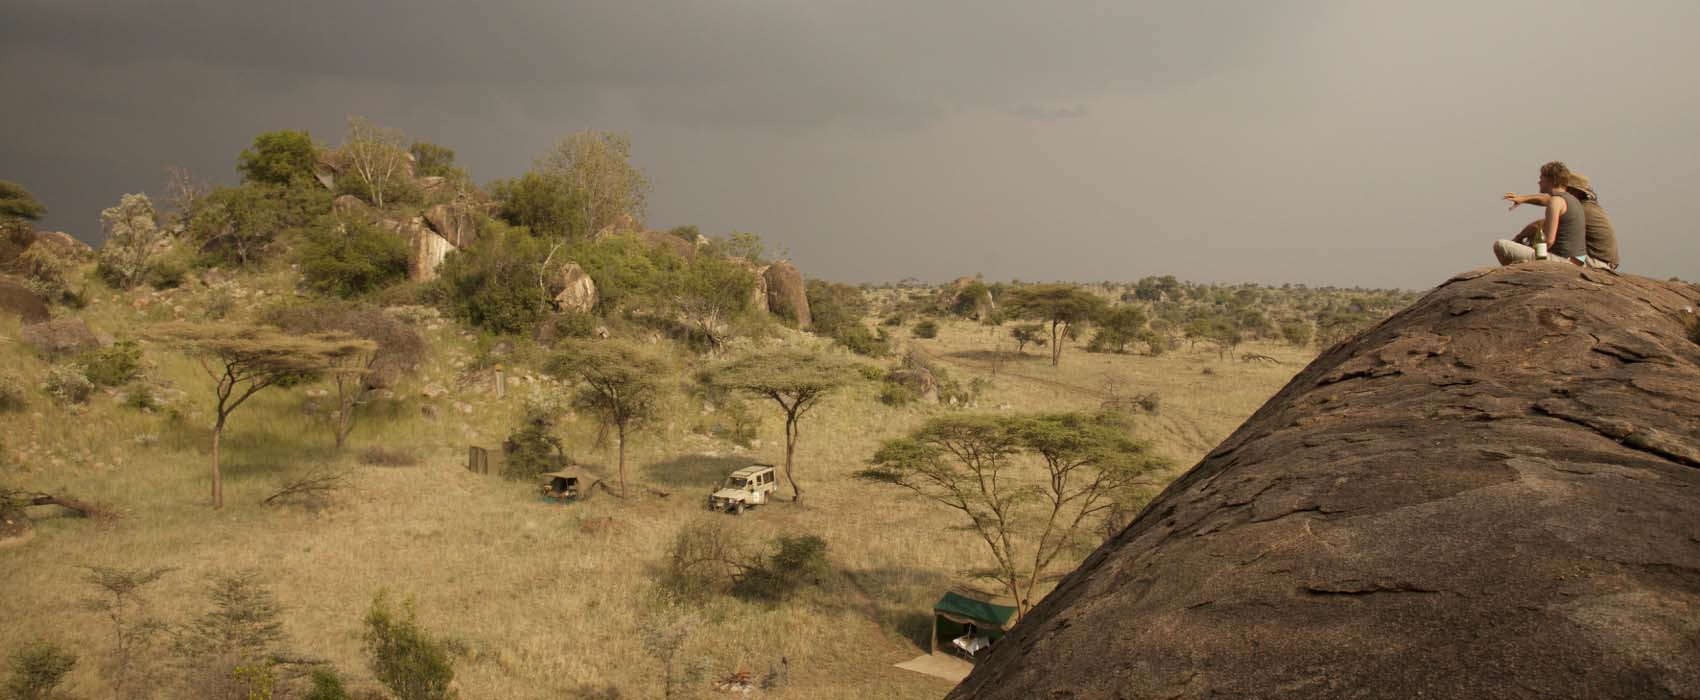 Serengeti Safari Africa